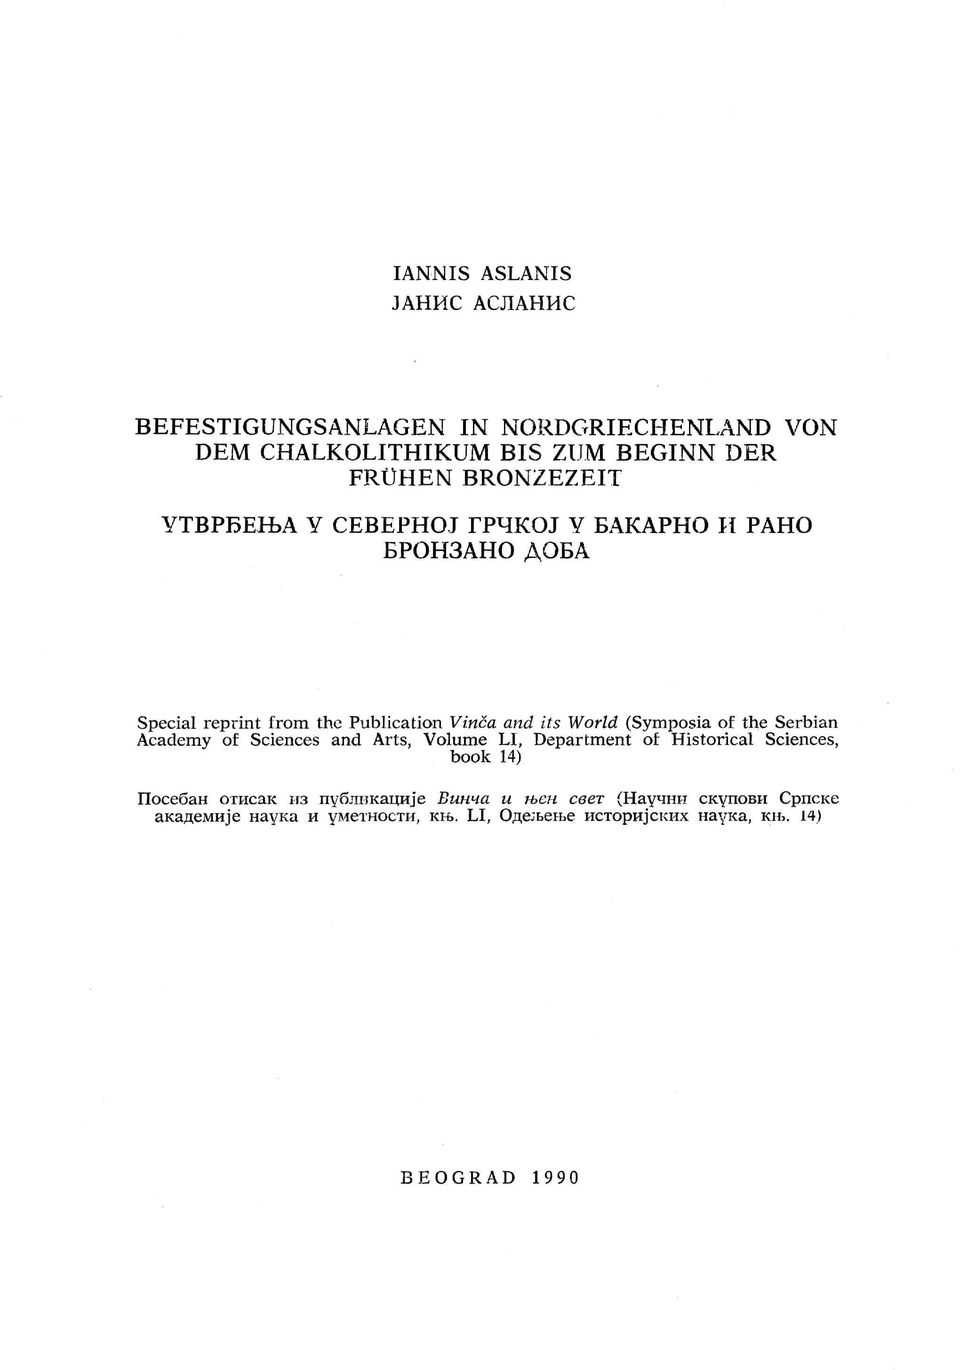 the Serbian Academy of Sciences and Arts, Volume LI, Department of Historical Sciences, book 14) Посебан отисак из публикащце